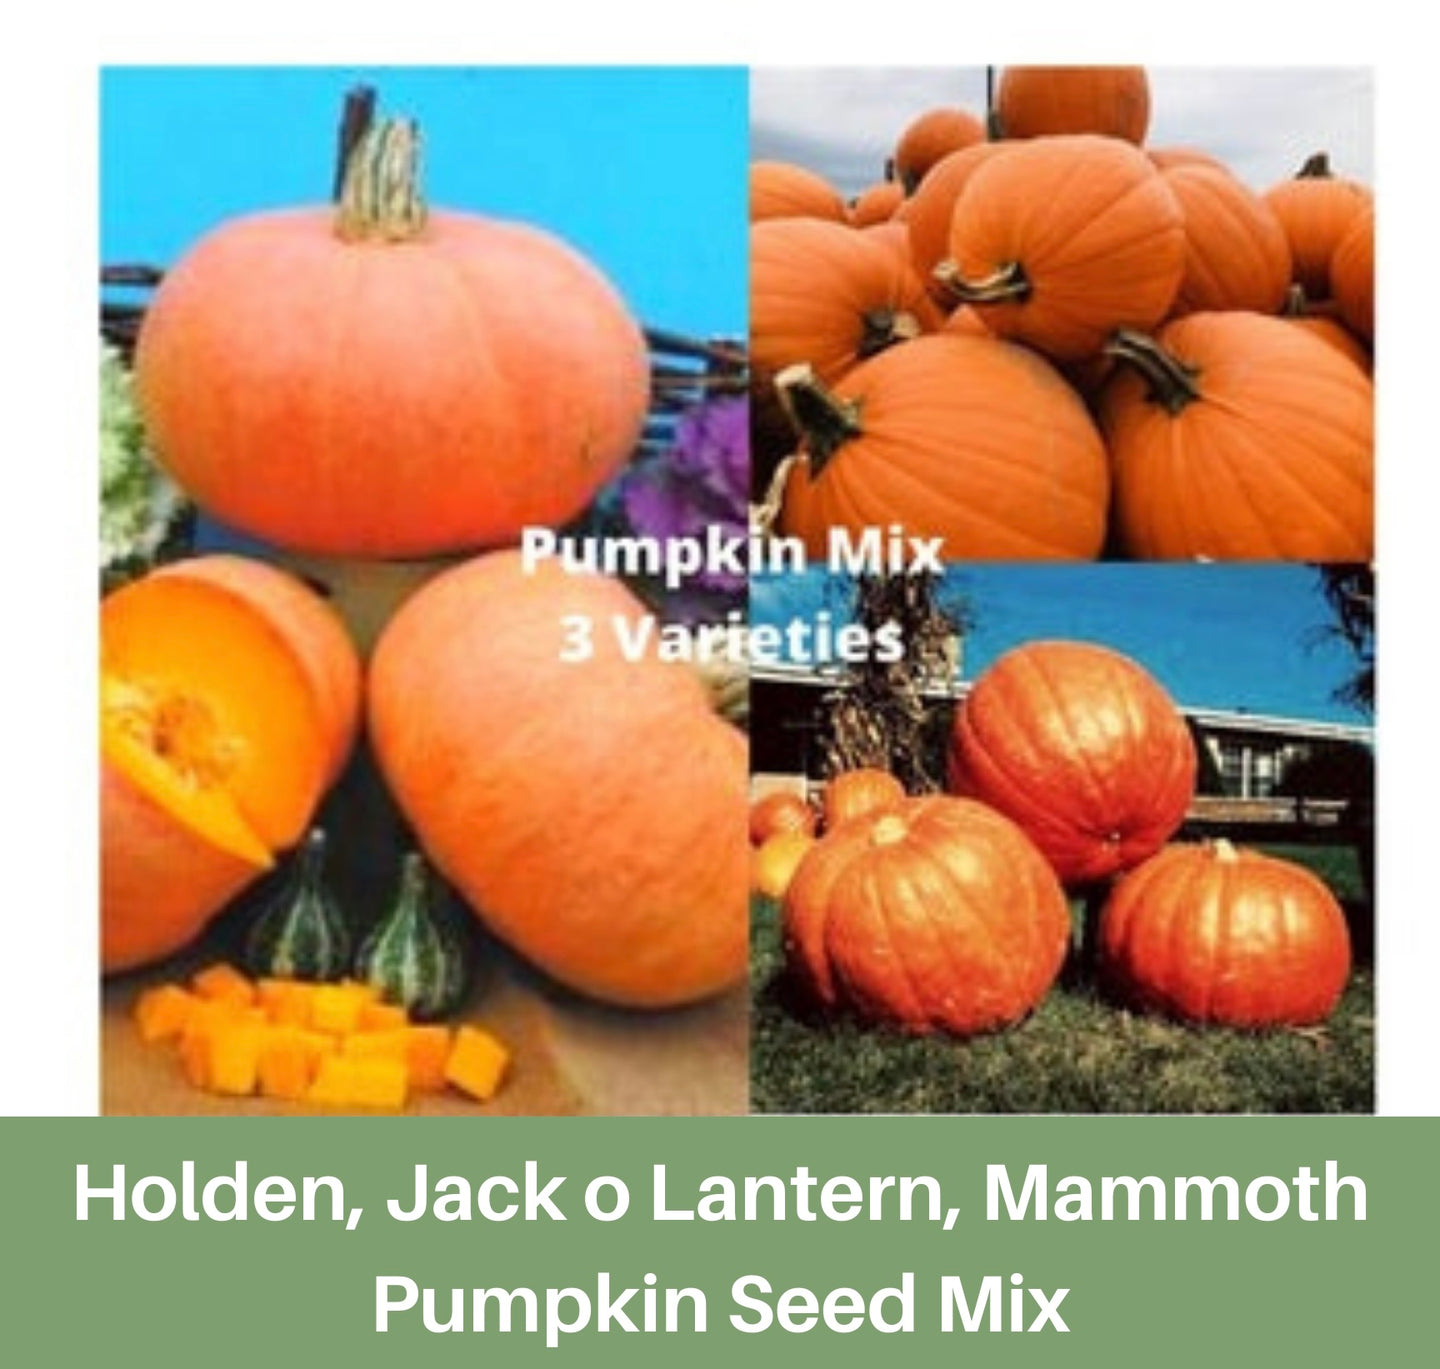 Heirloom Pumpkin Mix Seeds, 3 varieties,